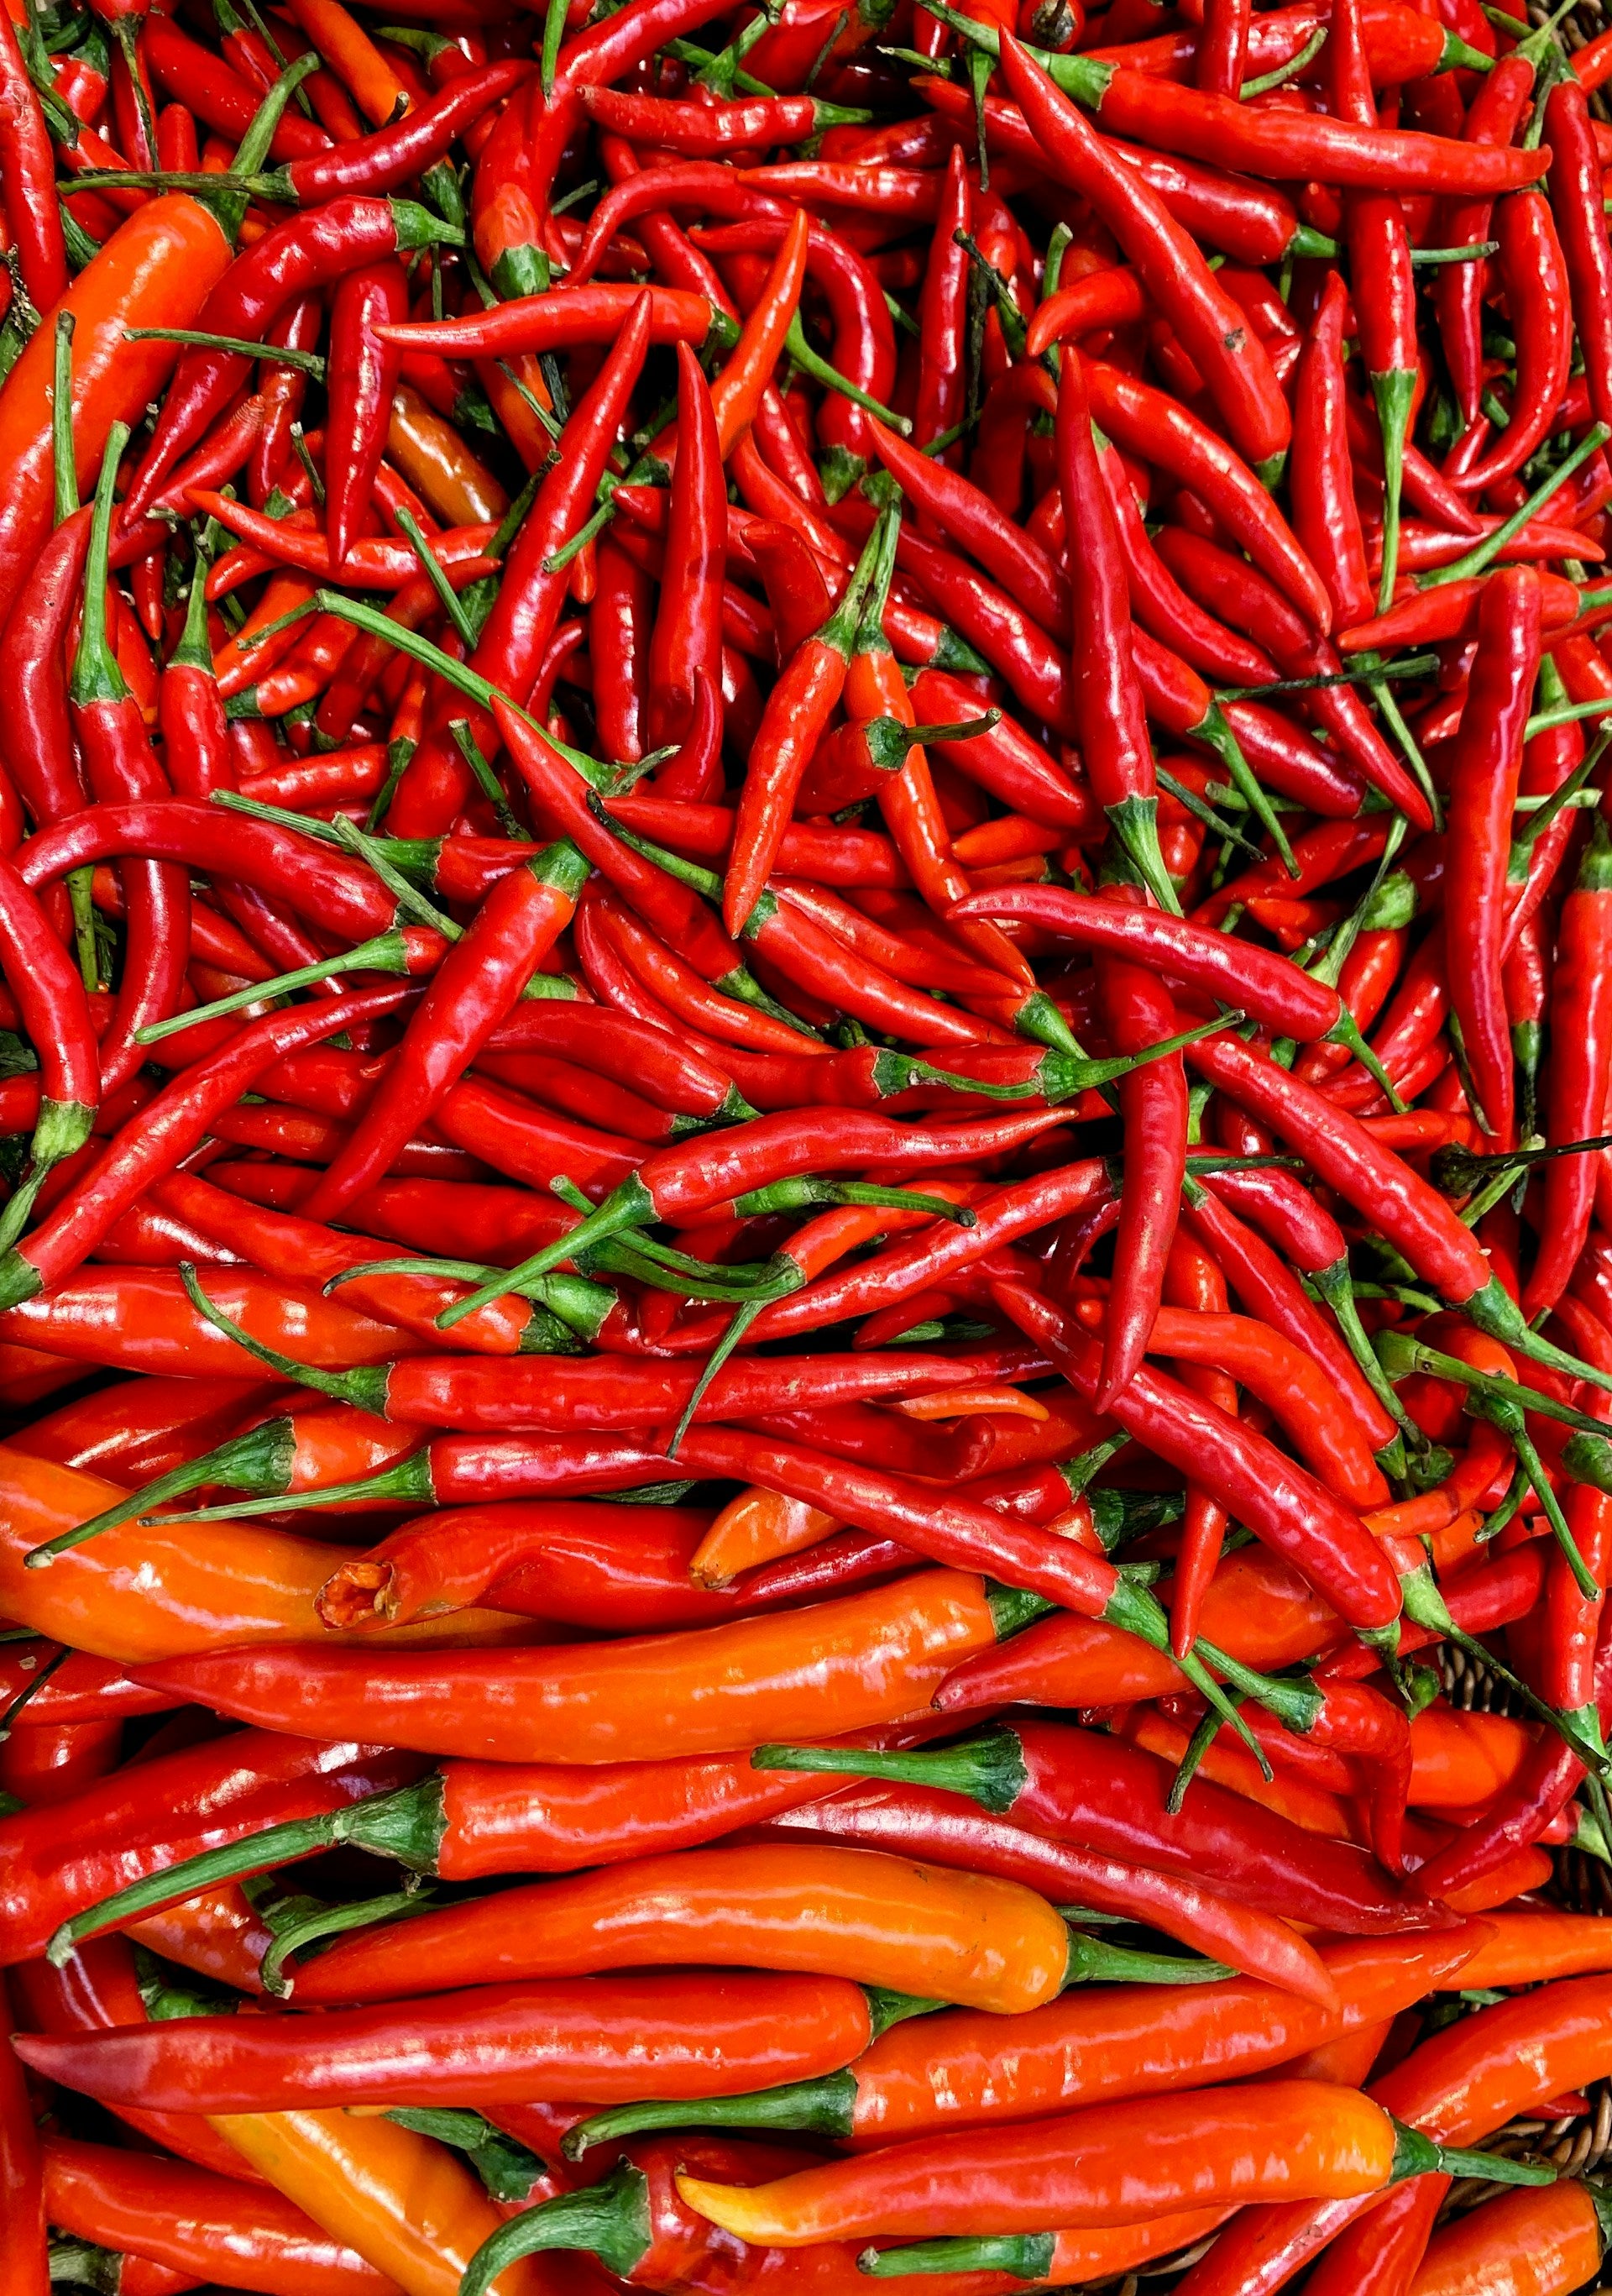 How Long Does Chili Last In The Fridge? | Fridge.com